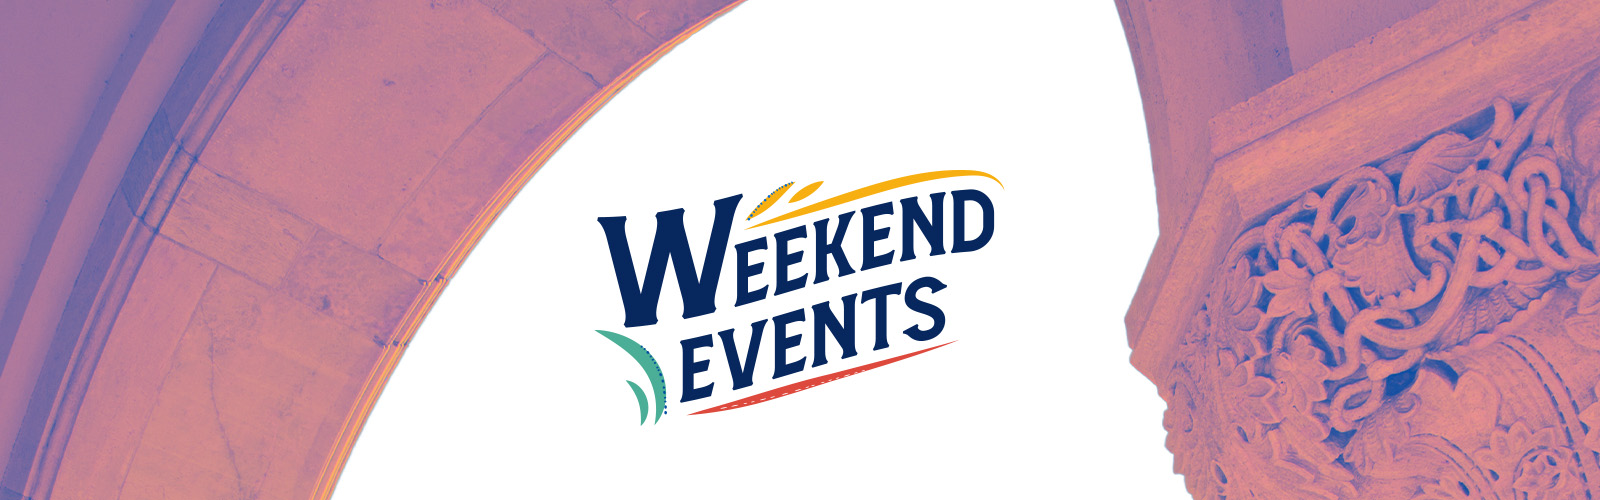 Alumni Weekend Events